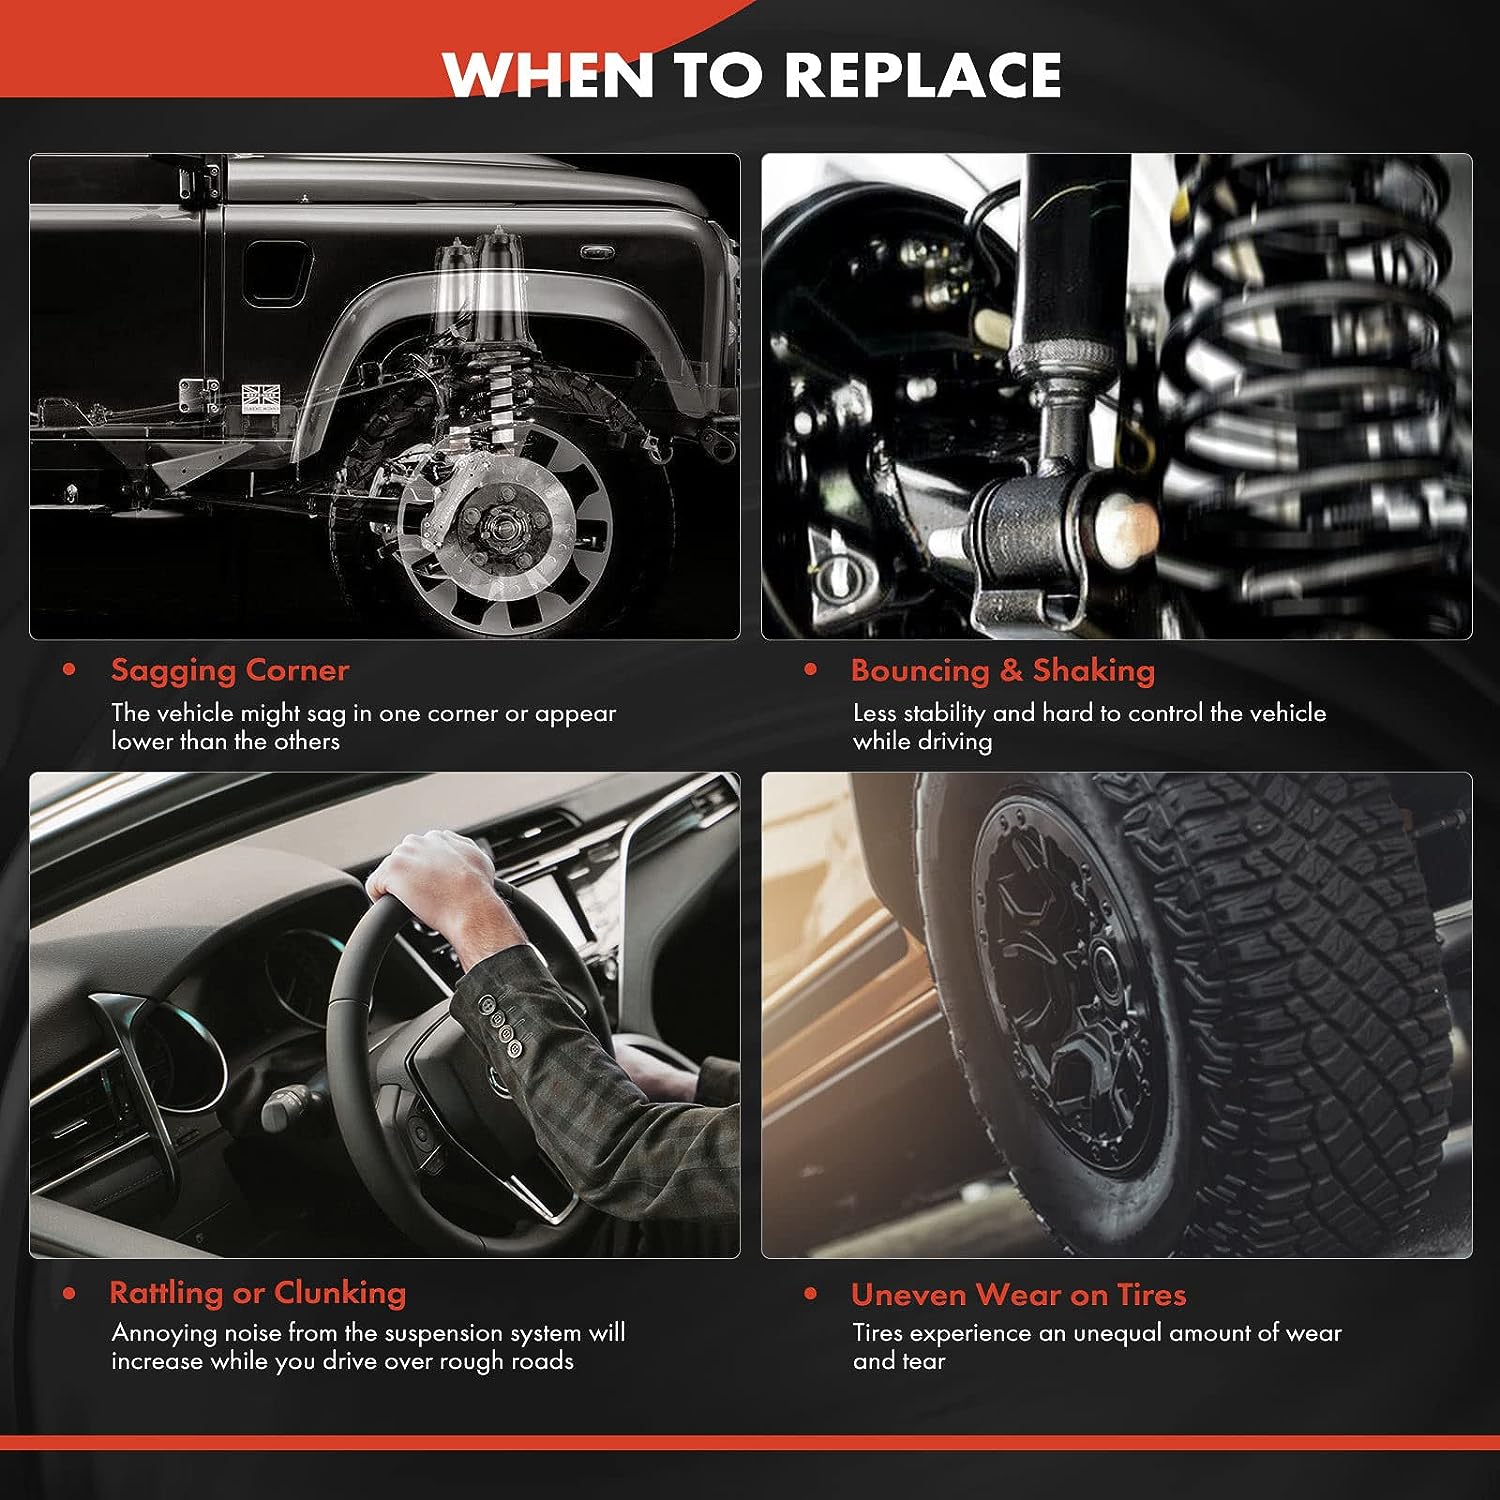 A-Premium 2Pcs Rear Suspension Coil Spring Set Compatible with Hyundai Sonata 2011-2014 & Kia Optima 2011-2015 2.0L 2.4L, Driver and Passenger Side, Replace# 553502T030, 553504C014 - image 5 of 5